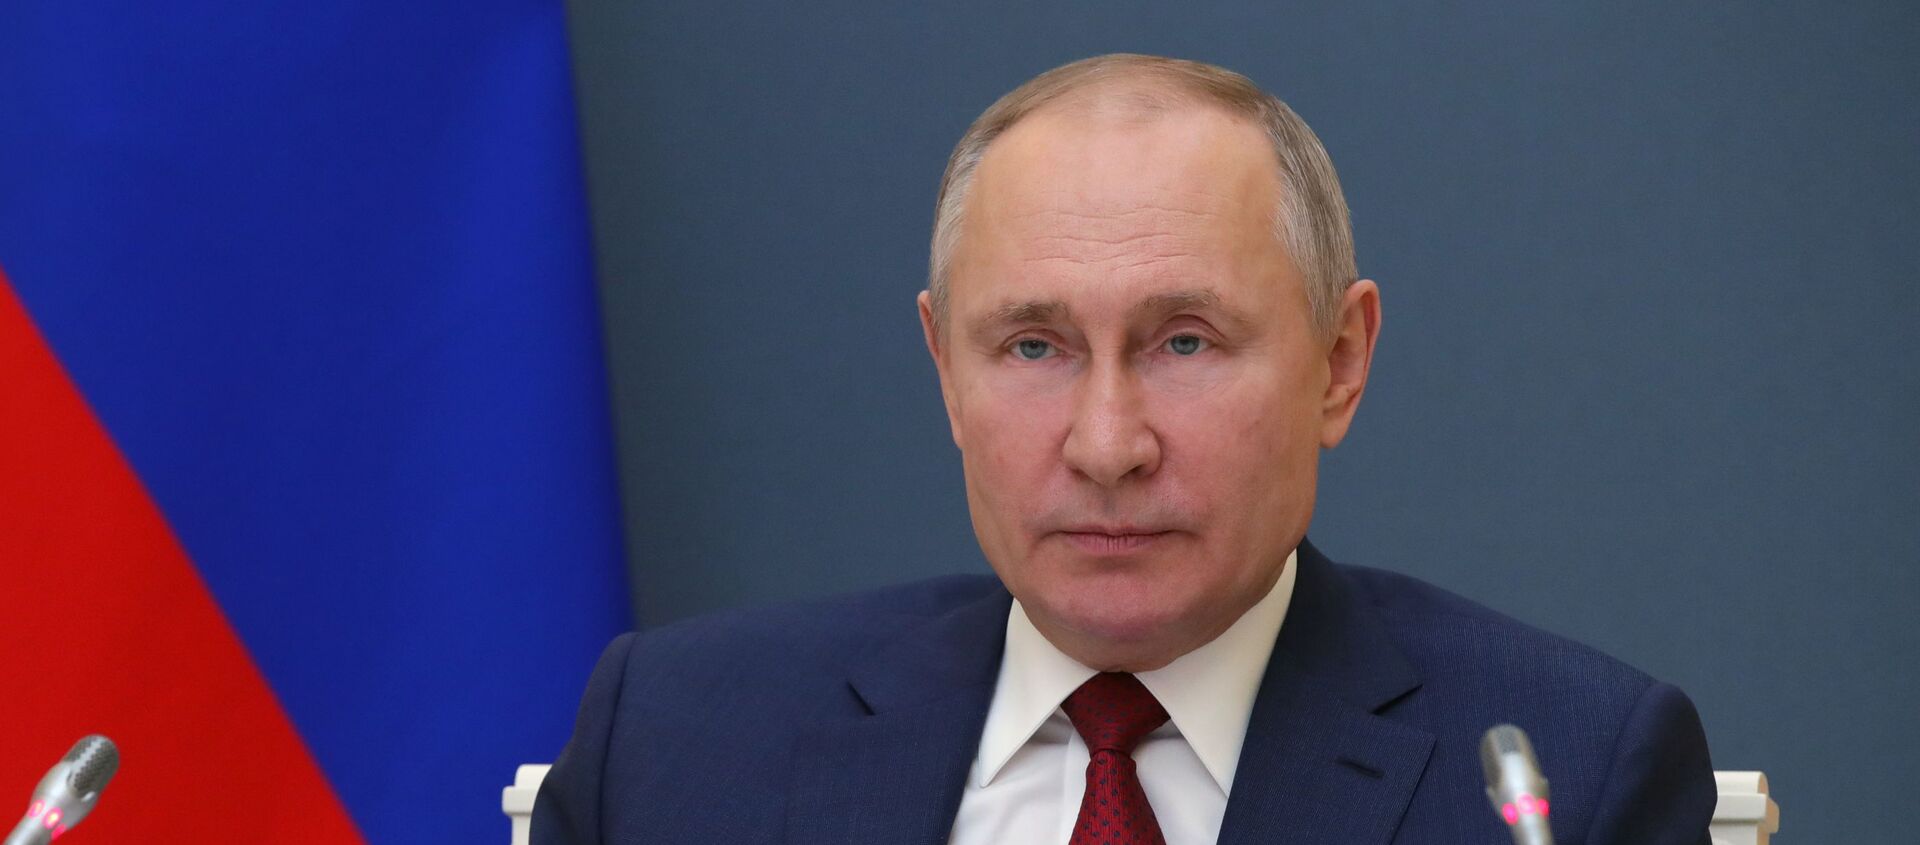 Президент РФ В. Путин выступил на сессии онлайн-форума Давосская повестка дня 2021 - Sputnik Армения, 1920, 21.05.2021